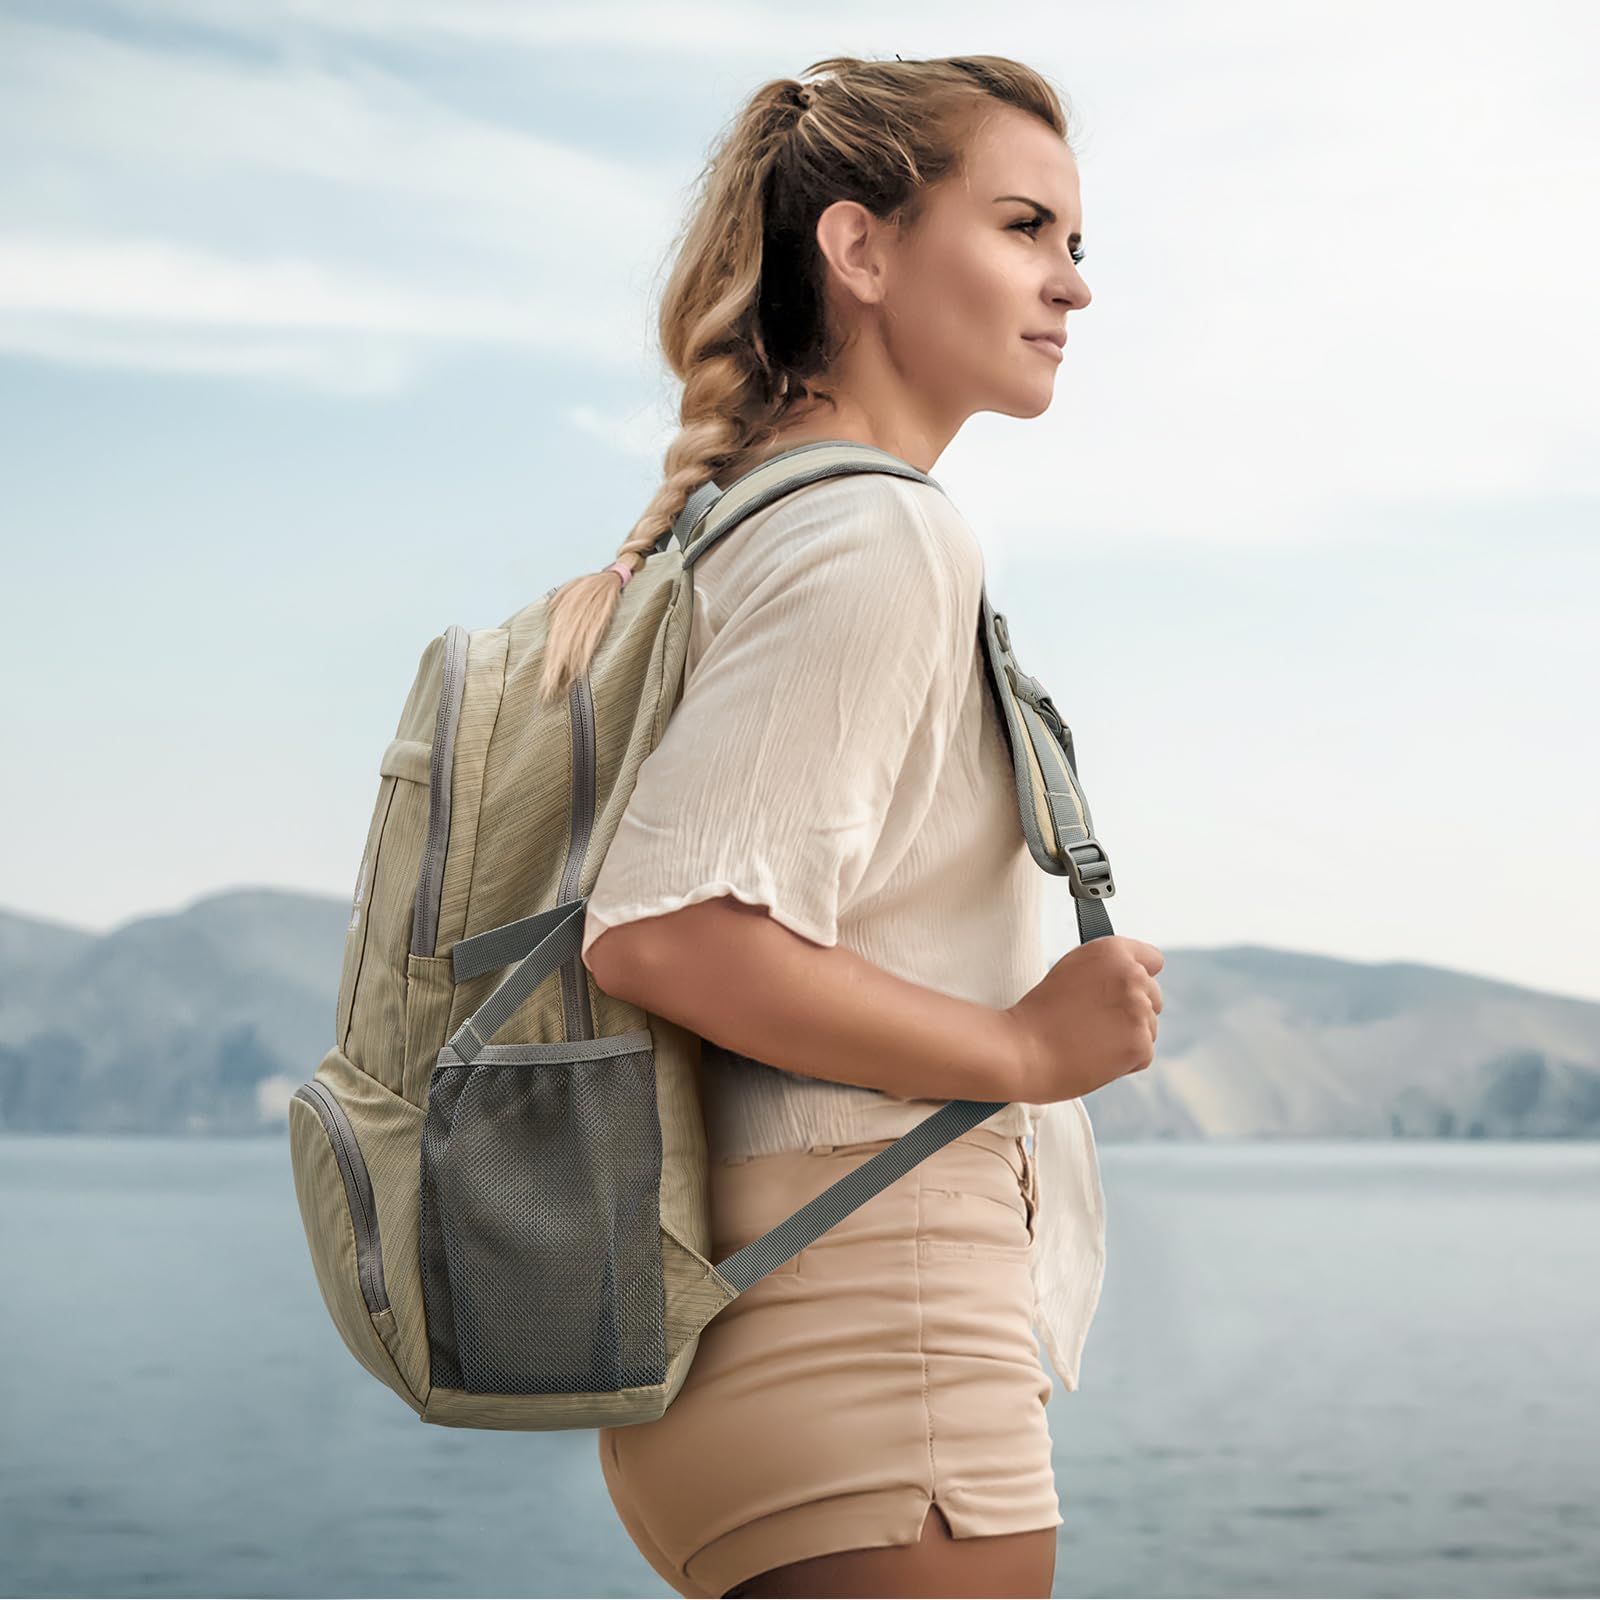 G4Free 30L Hiking Backpack Lightweight Packable Shoulder Daypack Outdoor Travel Foldable for Men Women